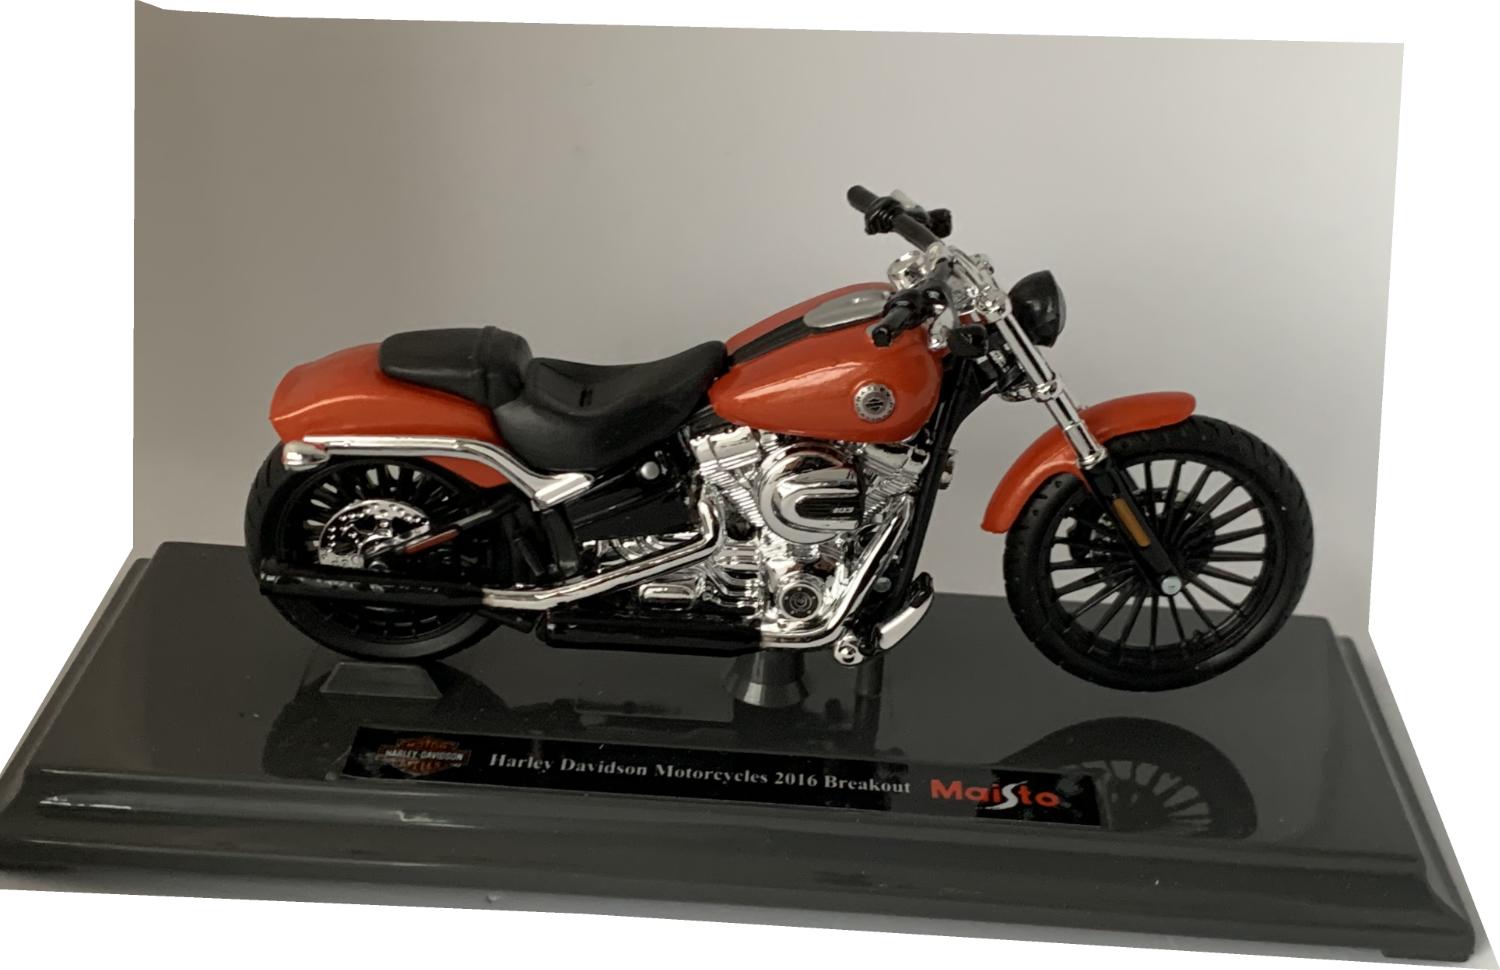 Harley Davidson 2016 Breakout in orange 1:18 scale model from Maisto